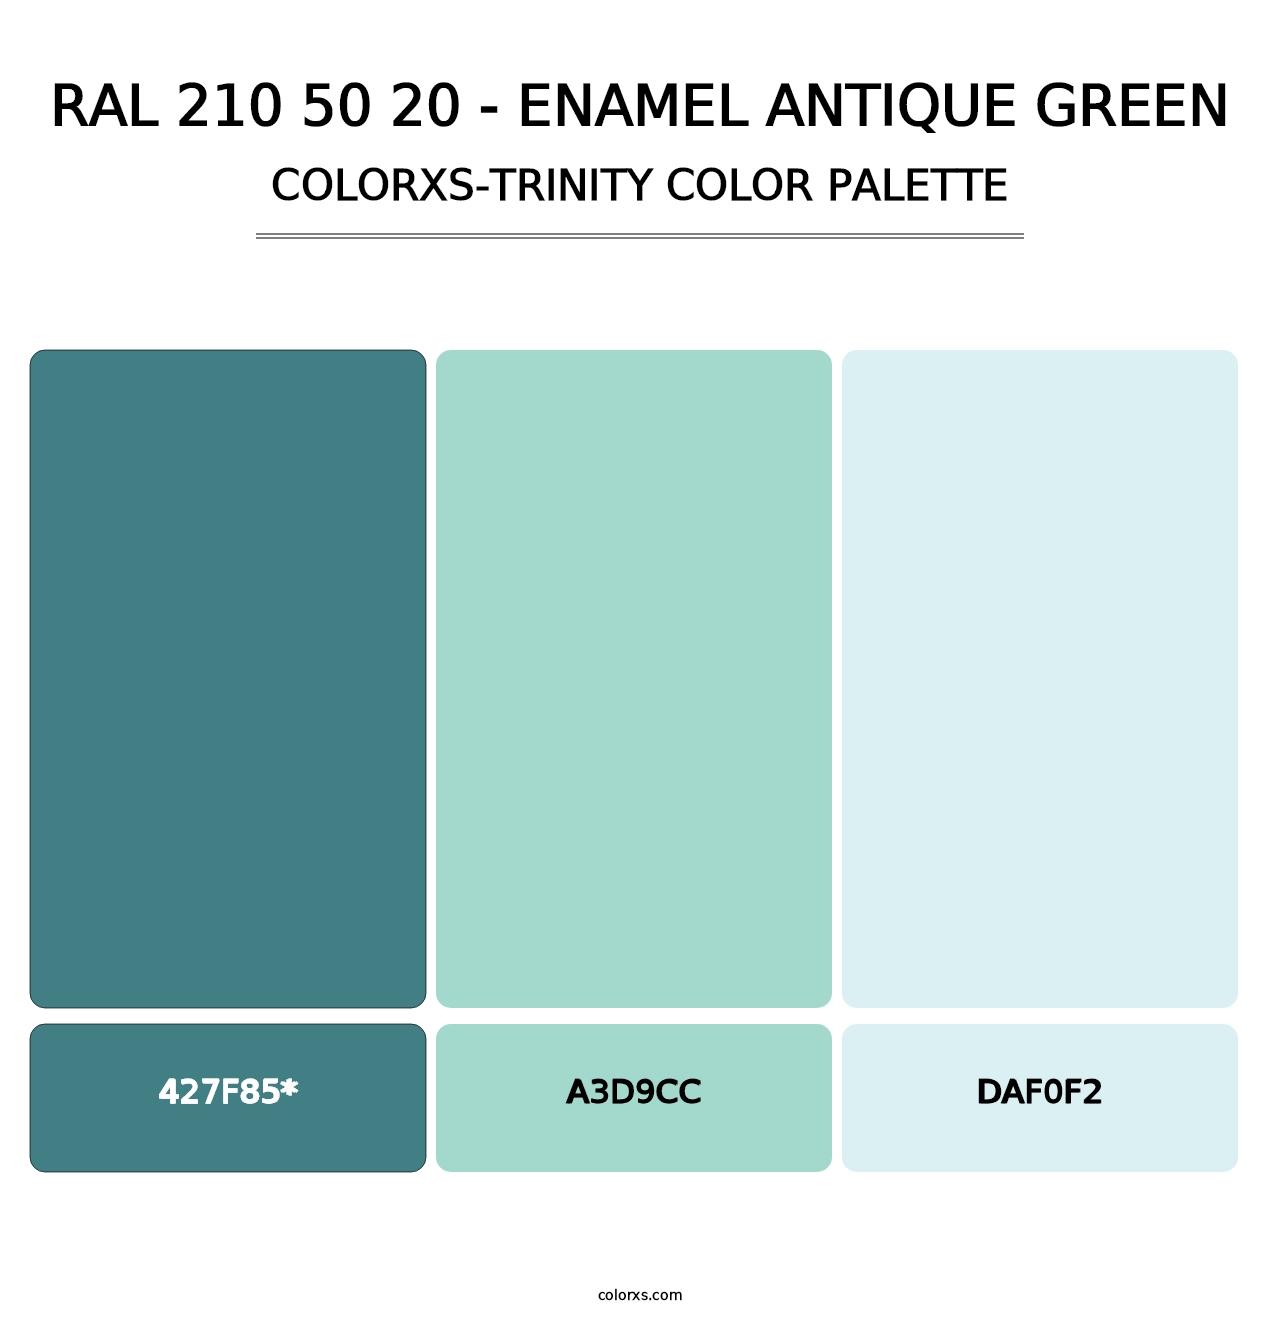 RAL 210 50 20 - Enamel Antique Green - Colorxs Trinity Palette